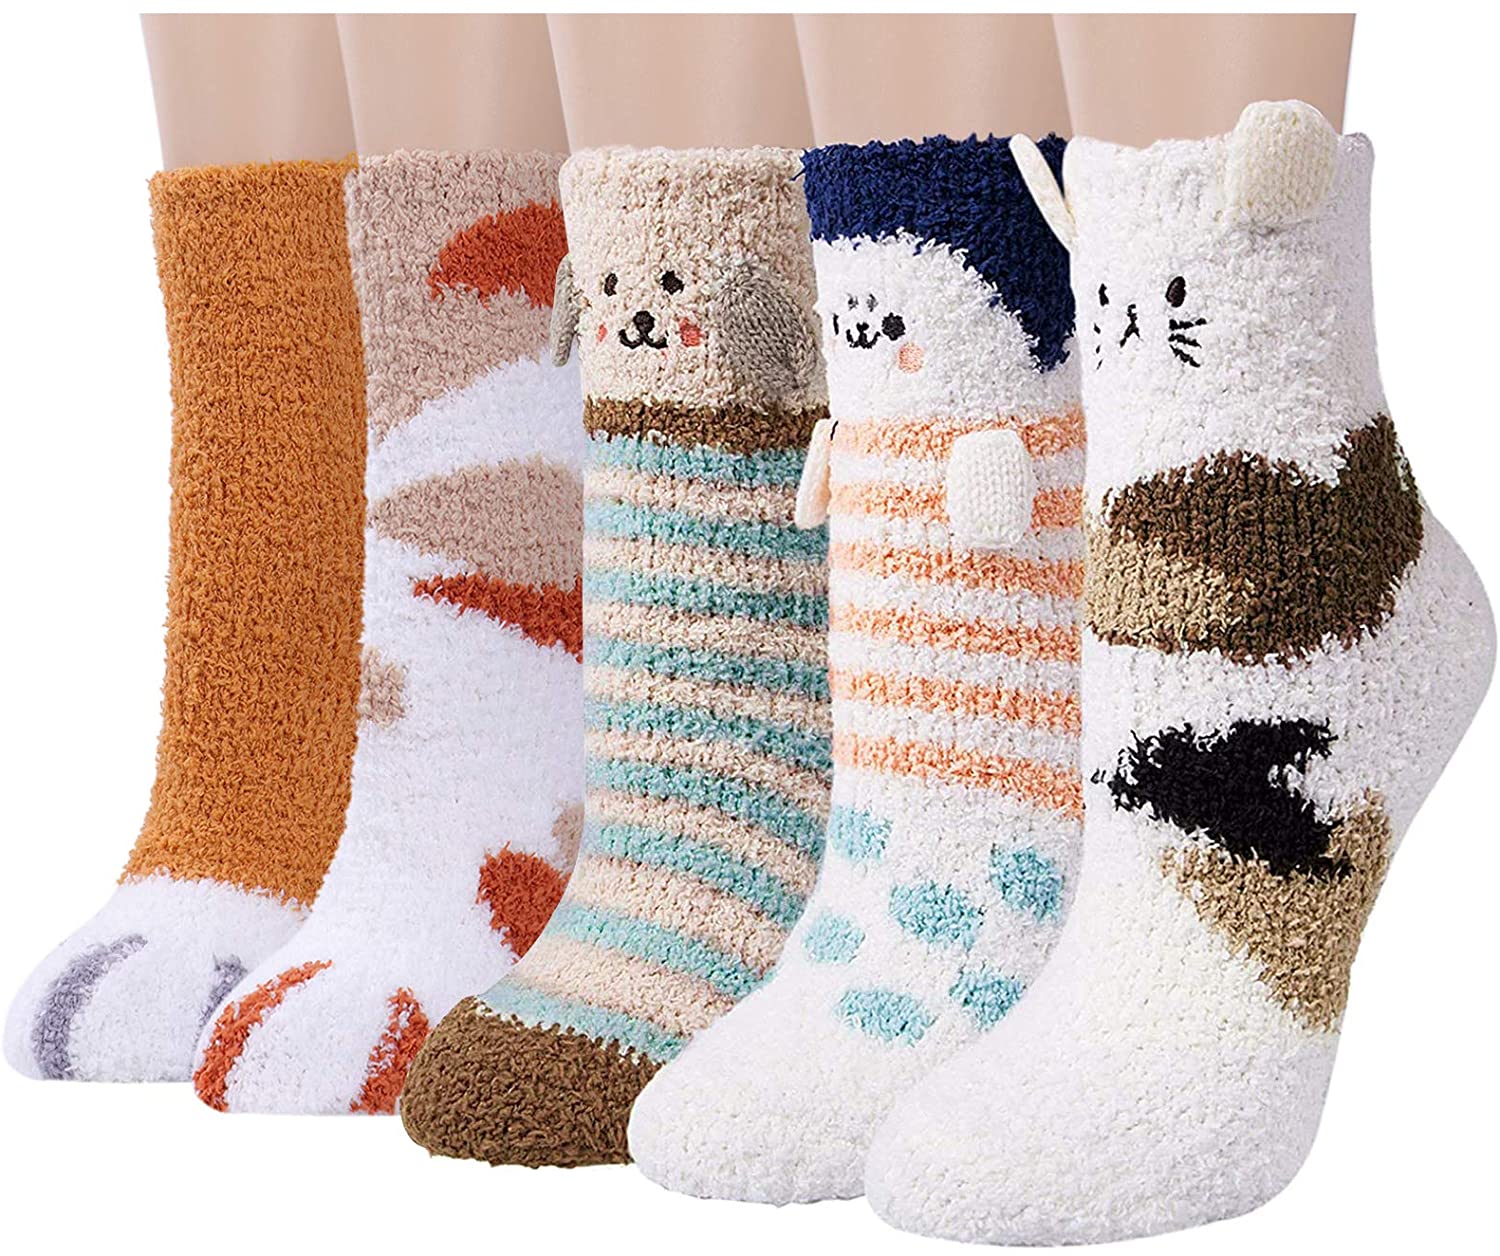 Details about   Plush Slipper Boot Socks Winter Warm Fuzzy  Super Soft Cozy Crew Socks 